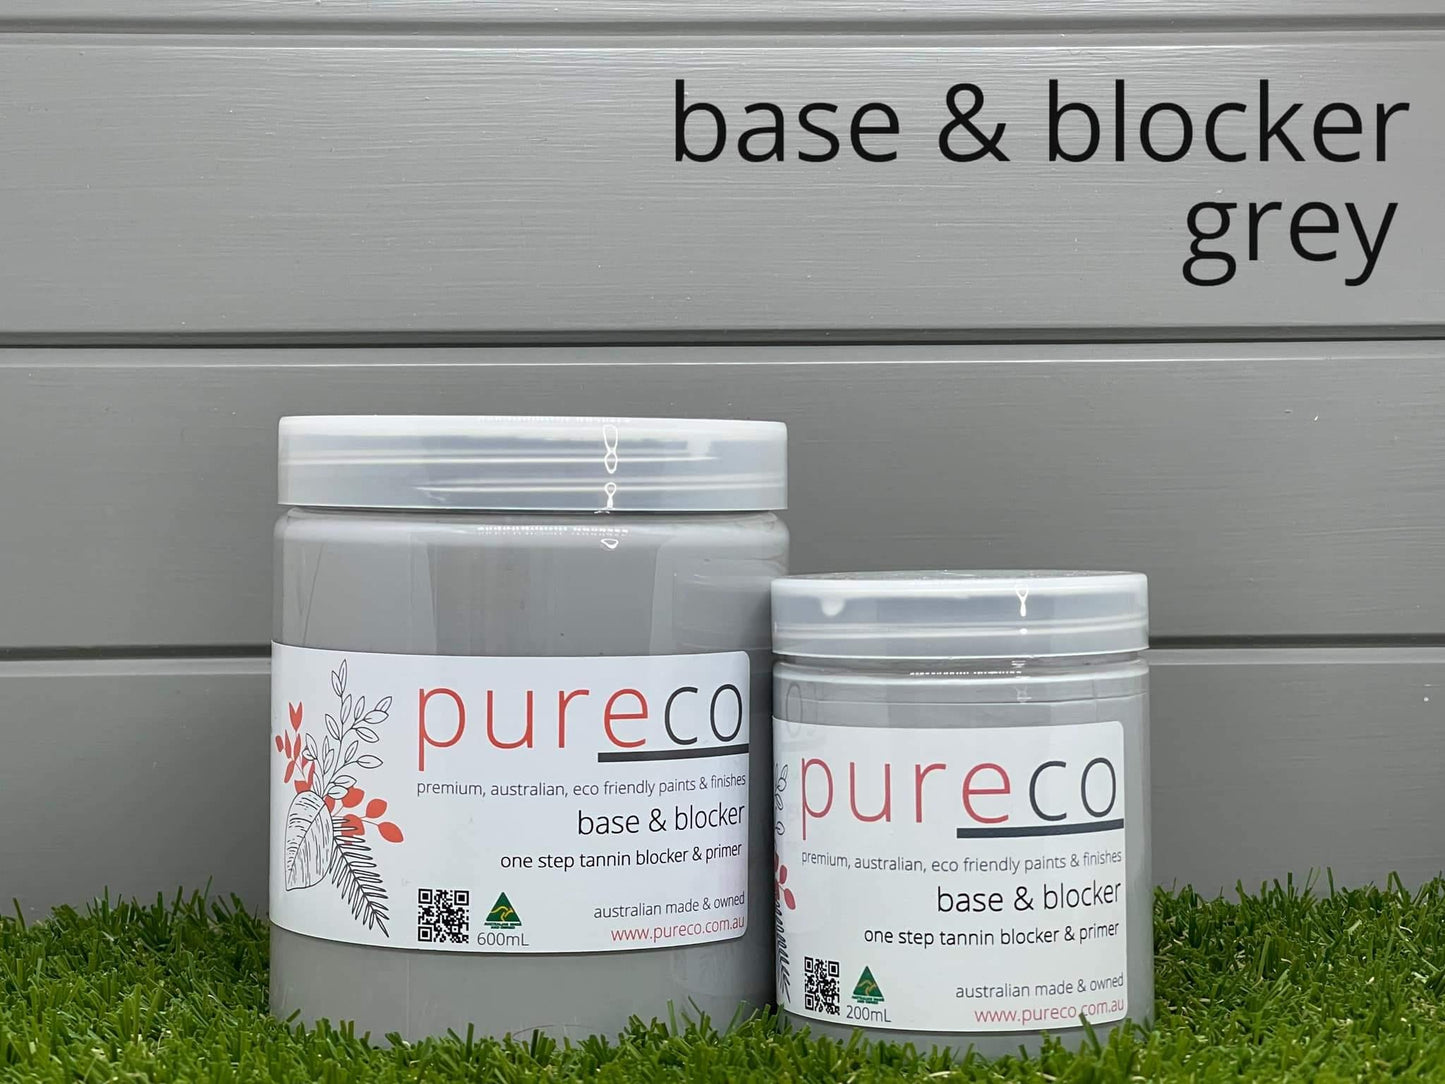 Pureco Paints Base & Blocker Grey